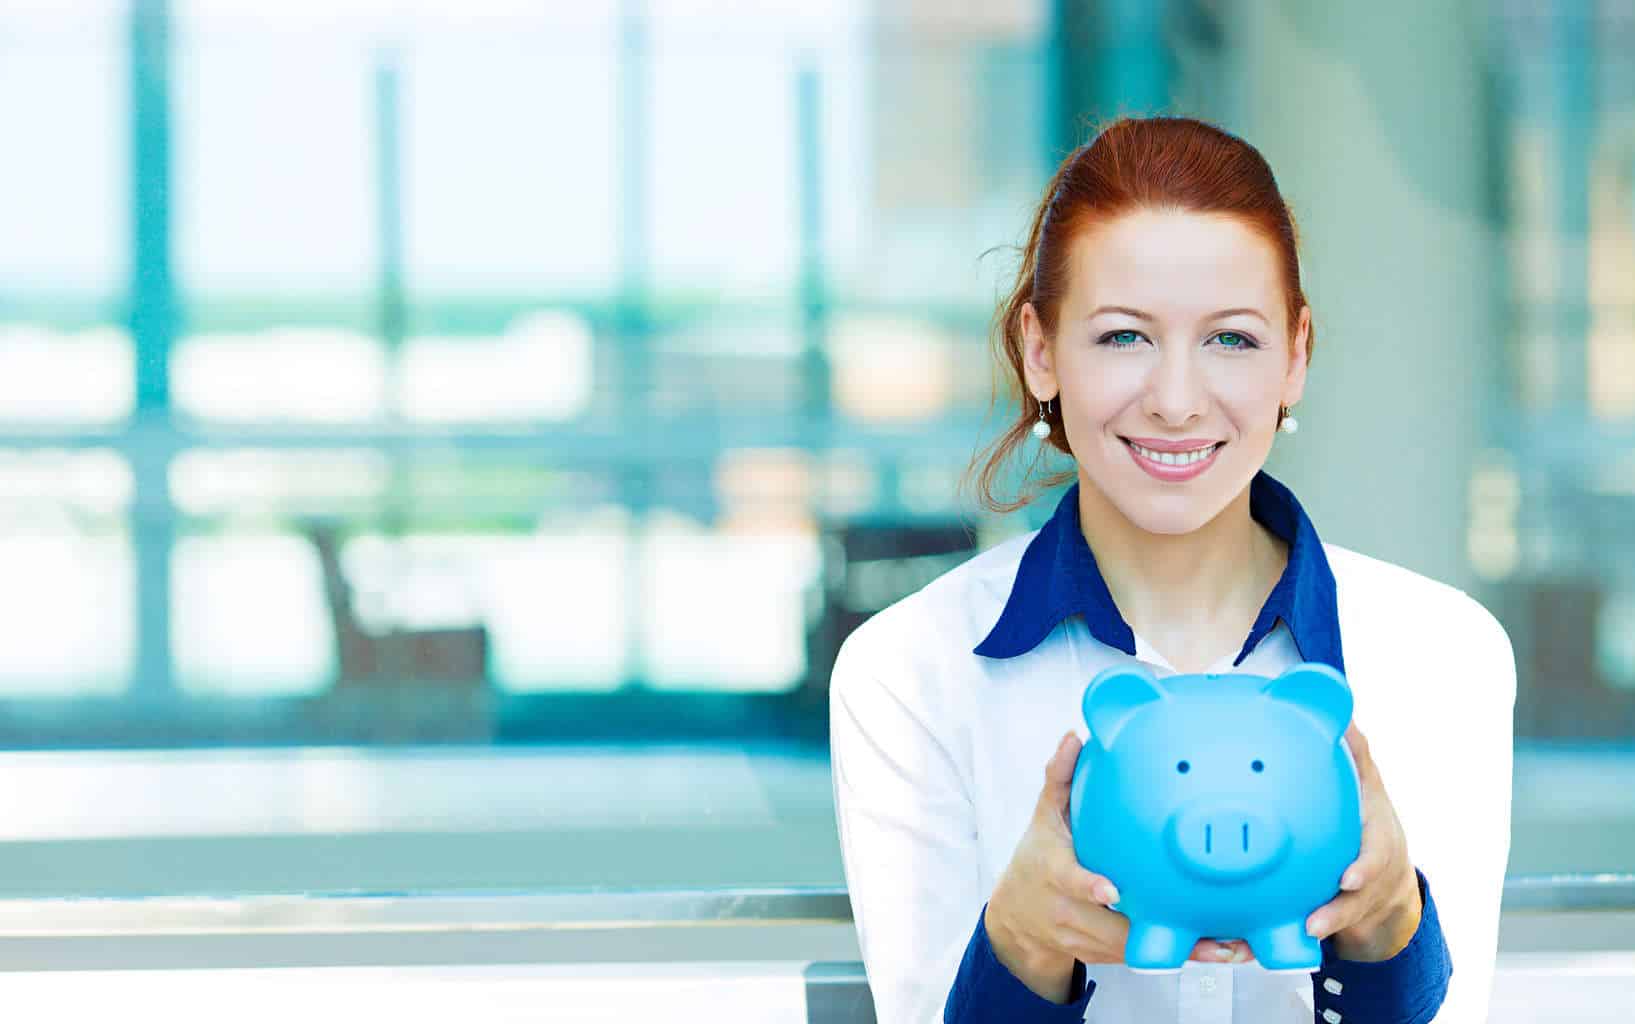 Savings Account or CD / Certificate of Deposit